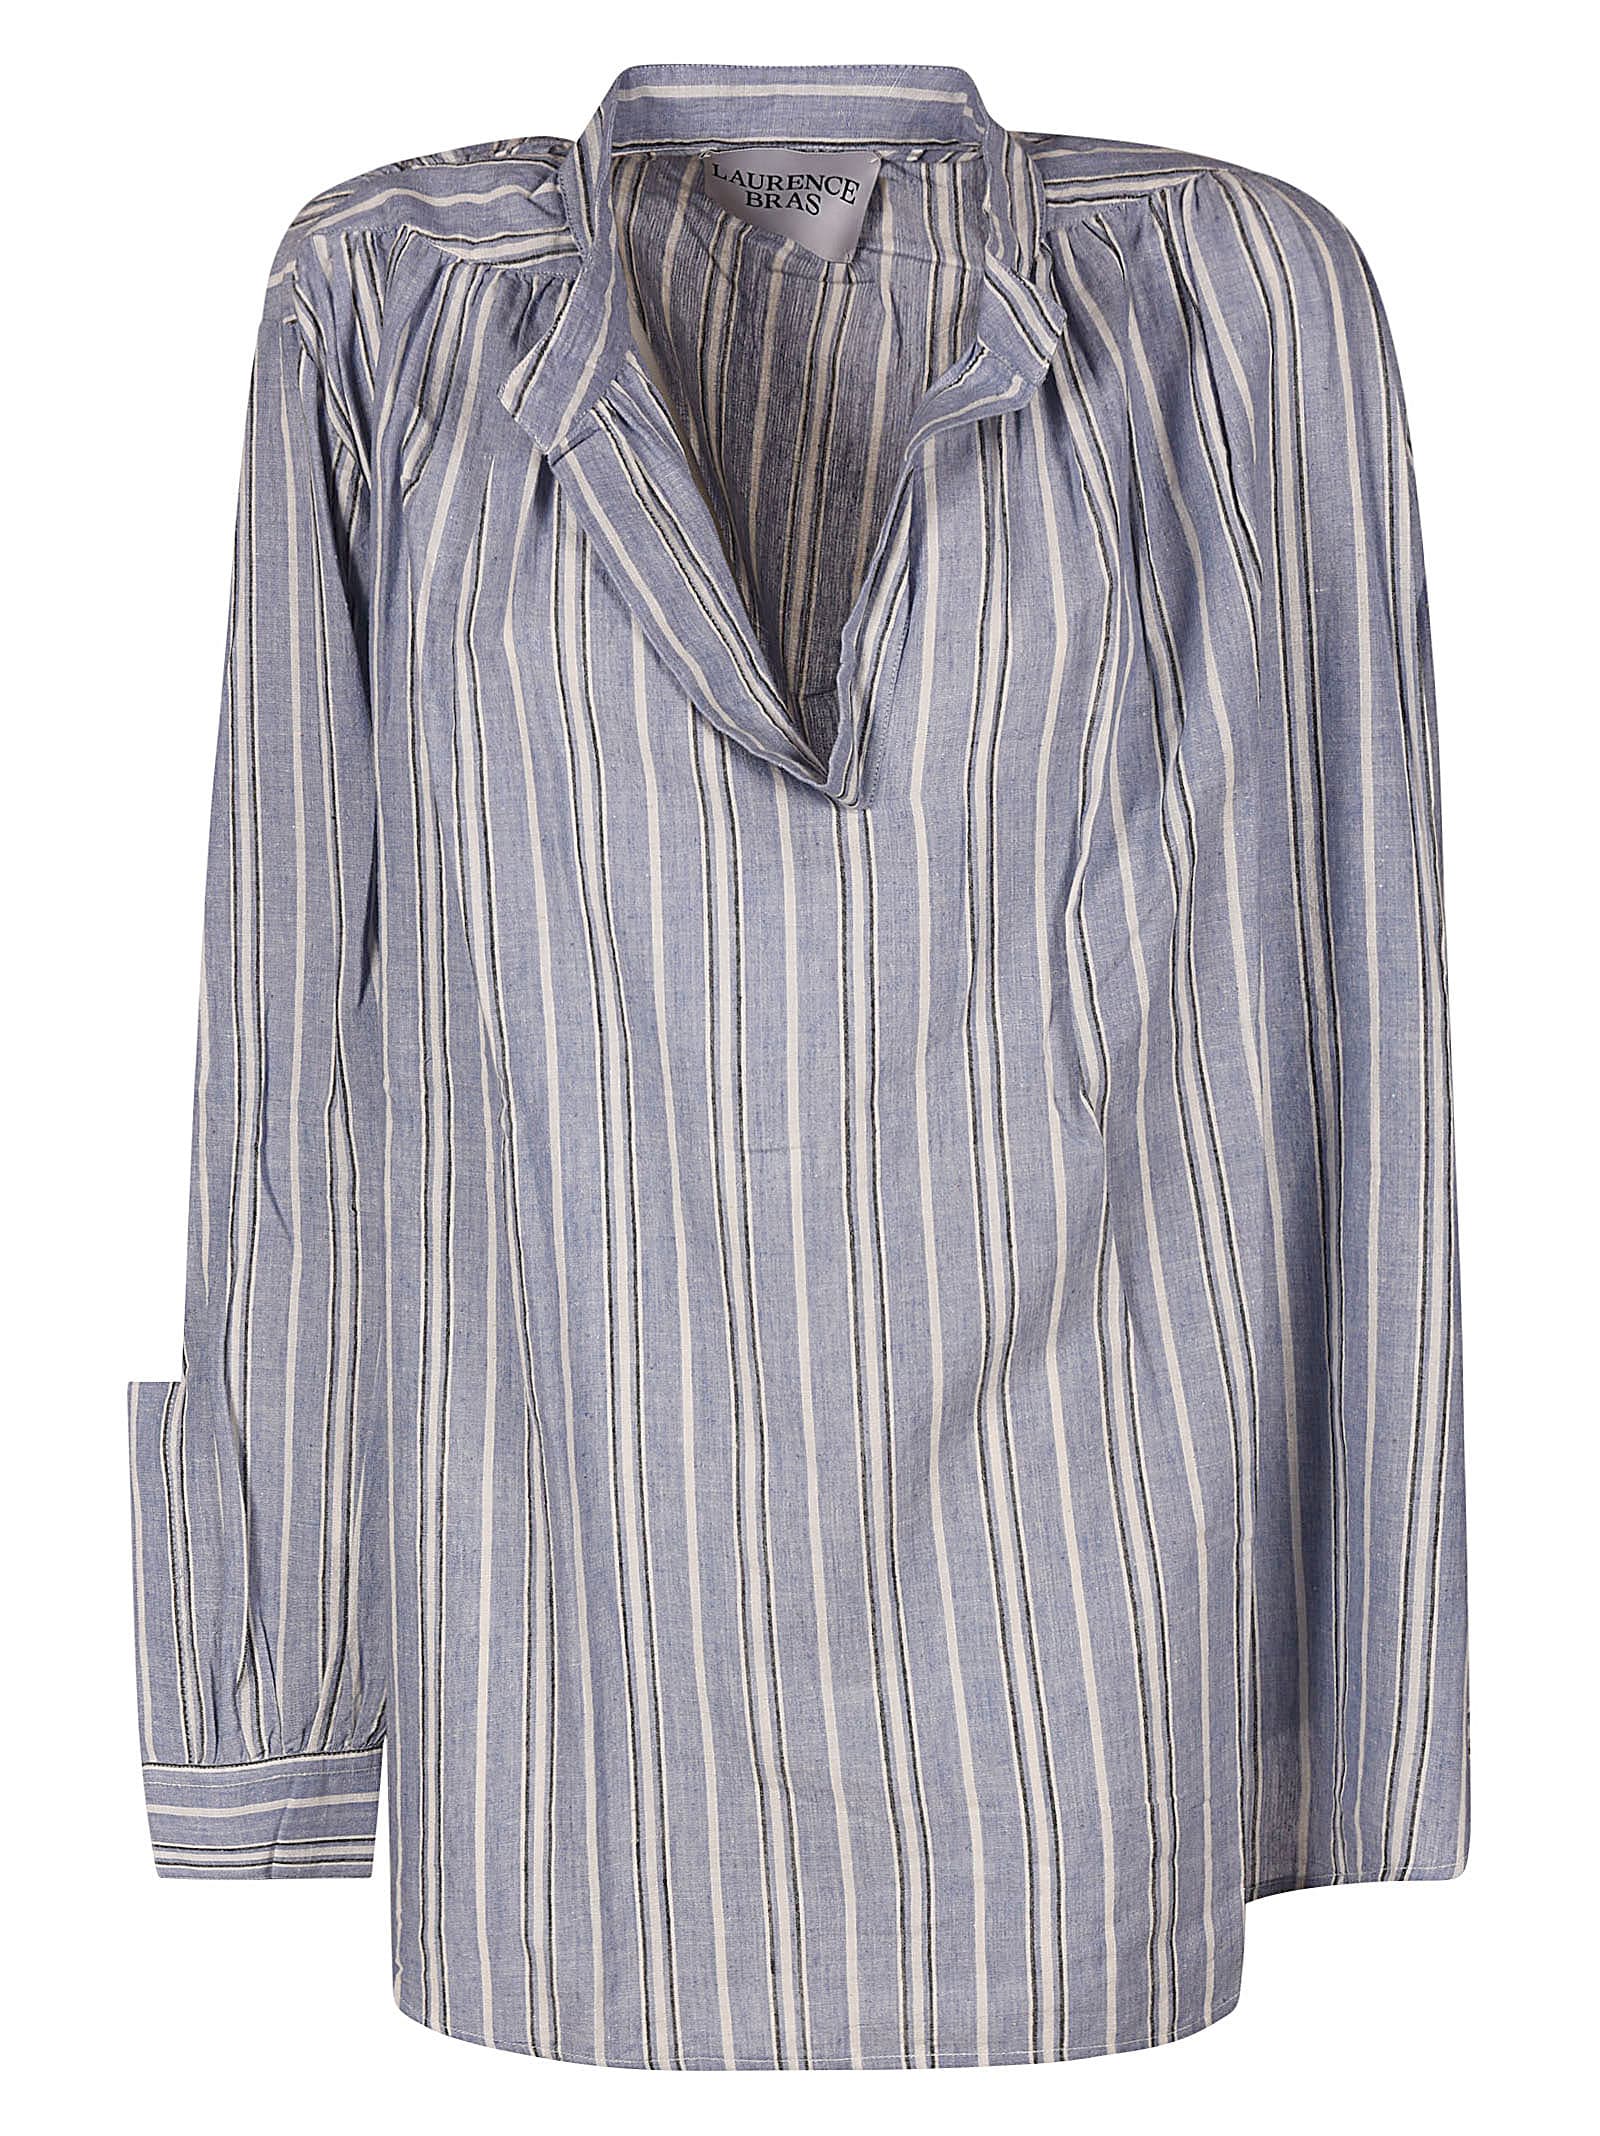 Laurence Bras Stripe Shirt